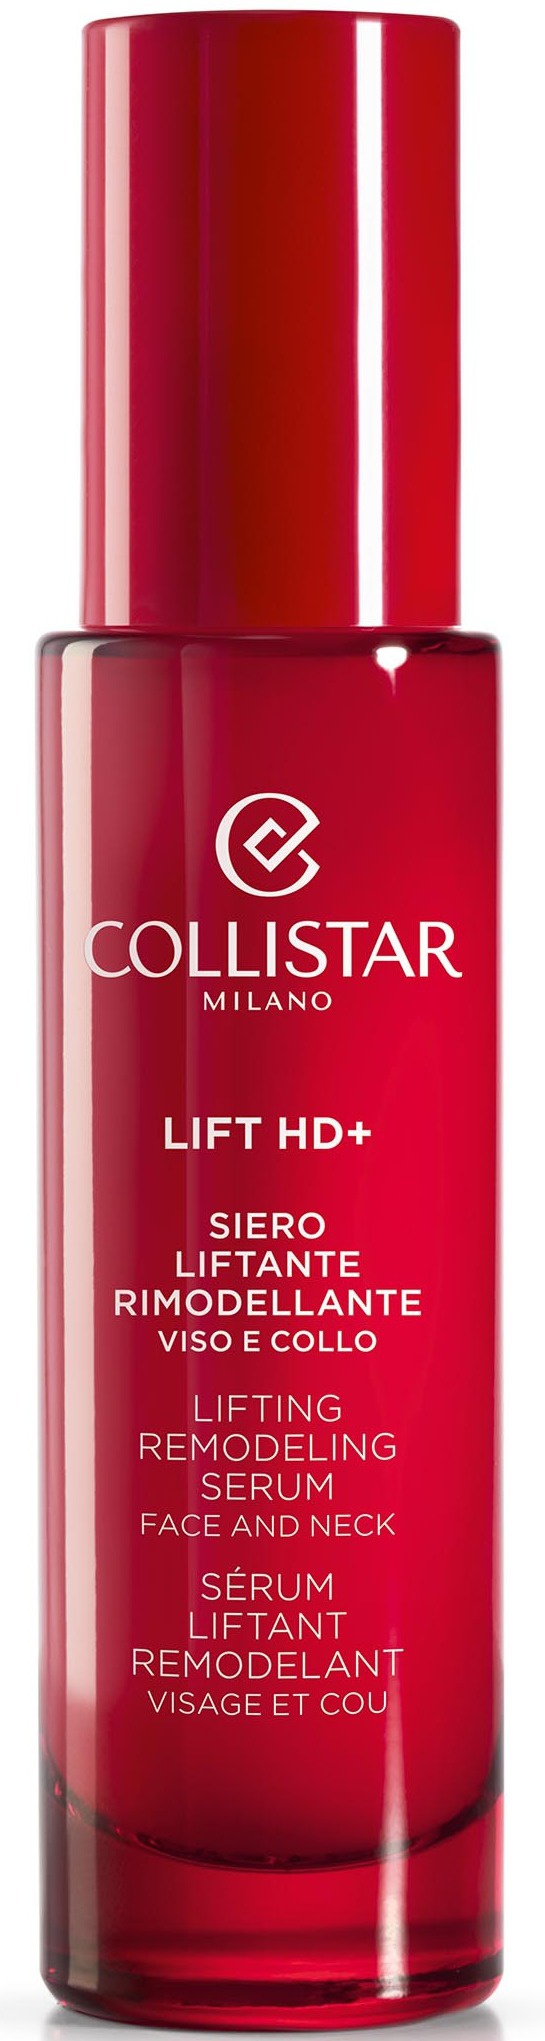 Collistar Lift Hd+ Lifting Remodeling Serum